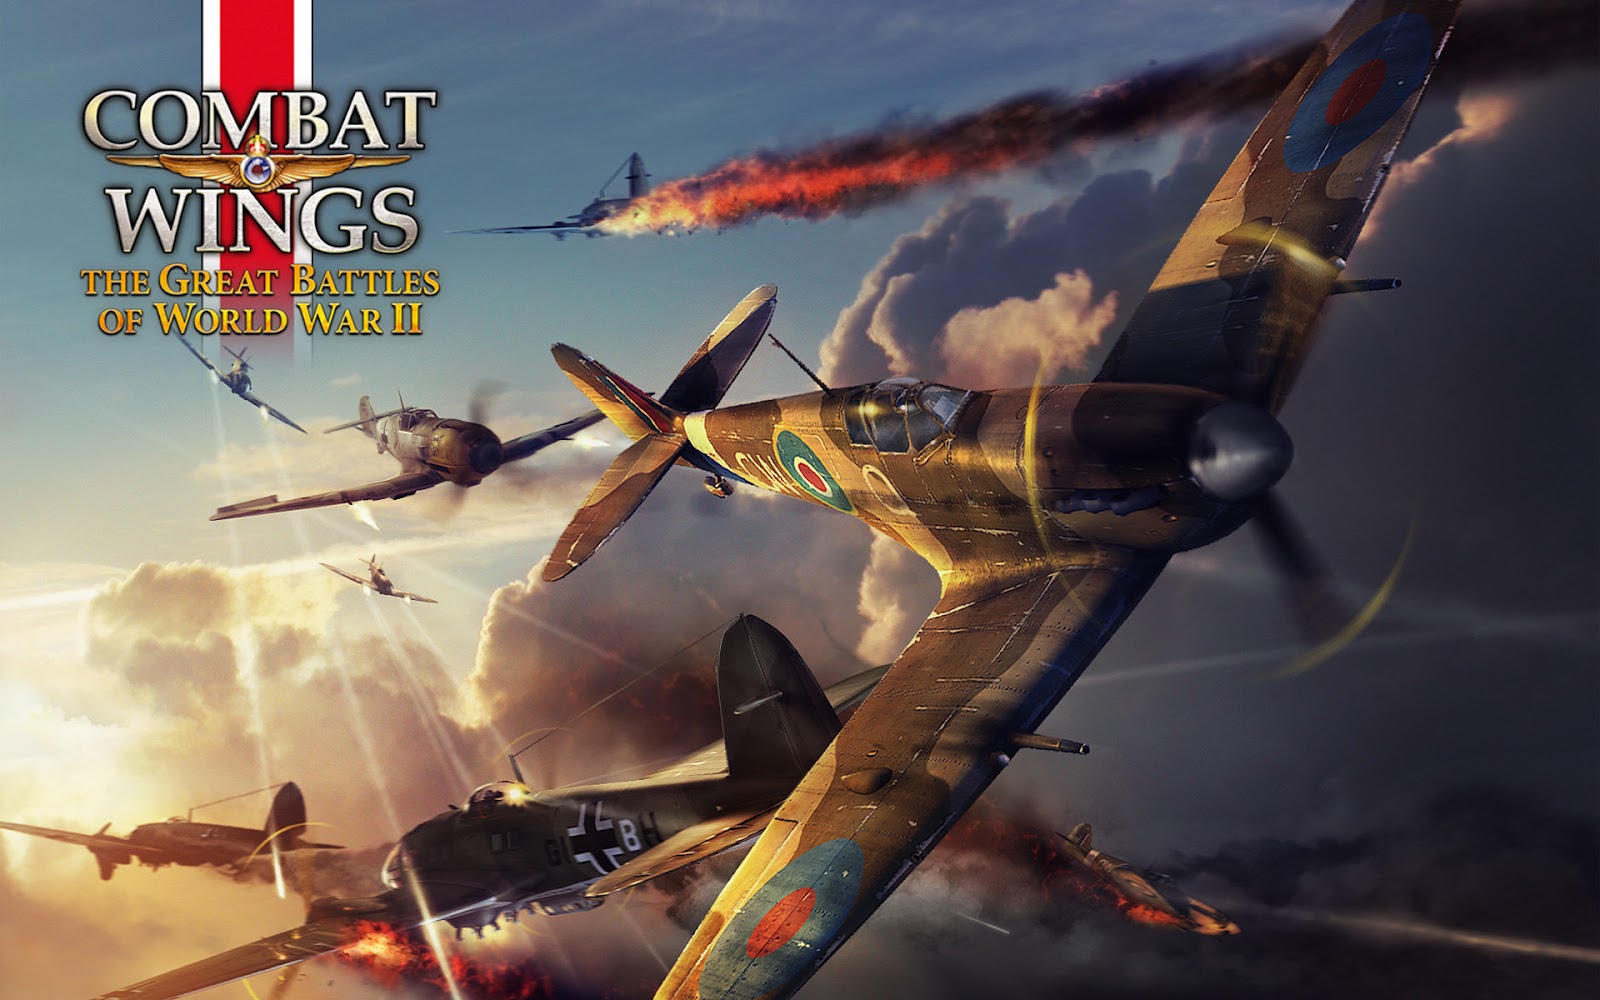 https://blogger.googleusercontent.com/img/b/R29vZ2xl/AVvXsEjXQIOxw5Mz_XBkzBYioZKhXS55HyH2PN8B136g5JQxkVoyH0TVsDfmojqsKGEi3HdRkNDkSSjEMSnh88UZktwX31kNEZSkGzqegBrkk1AkEfucuyTUTvr4rHwZNIy31M_jp4KWOwZKBH4/s1600/Combat_Wings_Great_Battles_of_World_War_2_Cover_Wallpaper_gWb.jpg